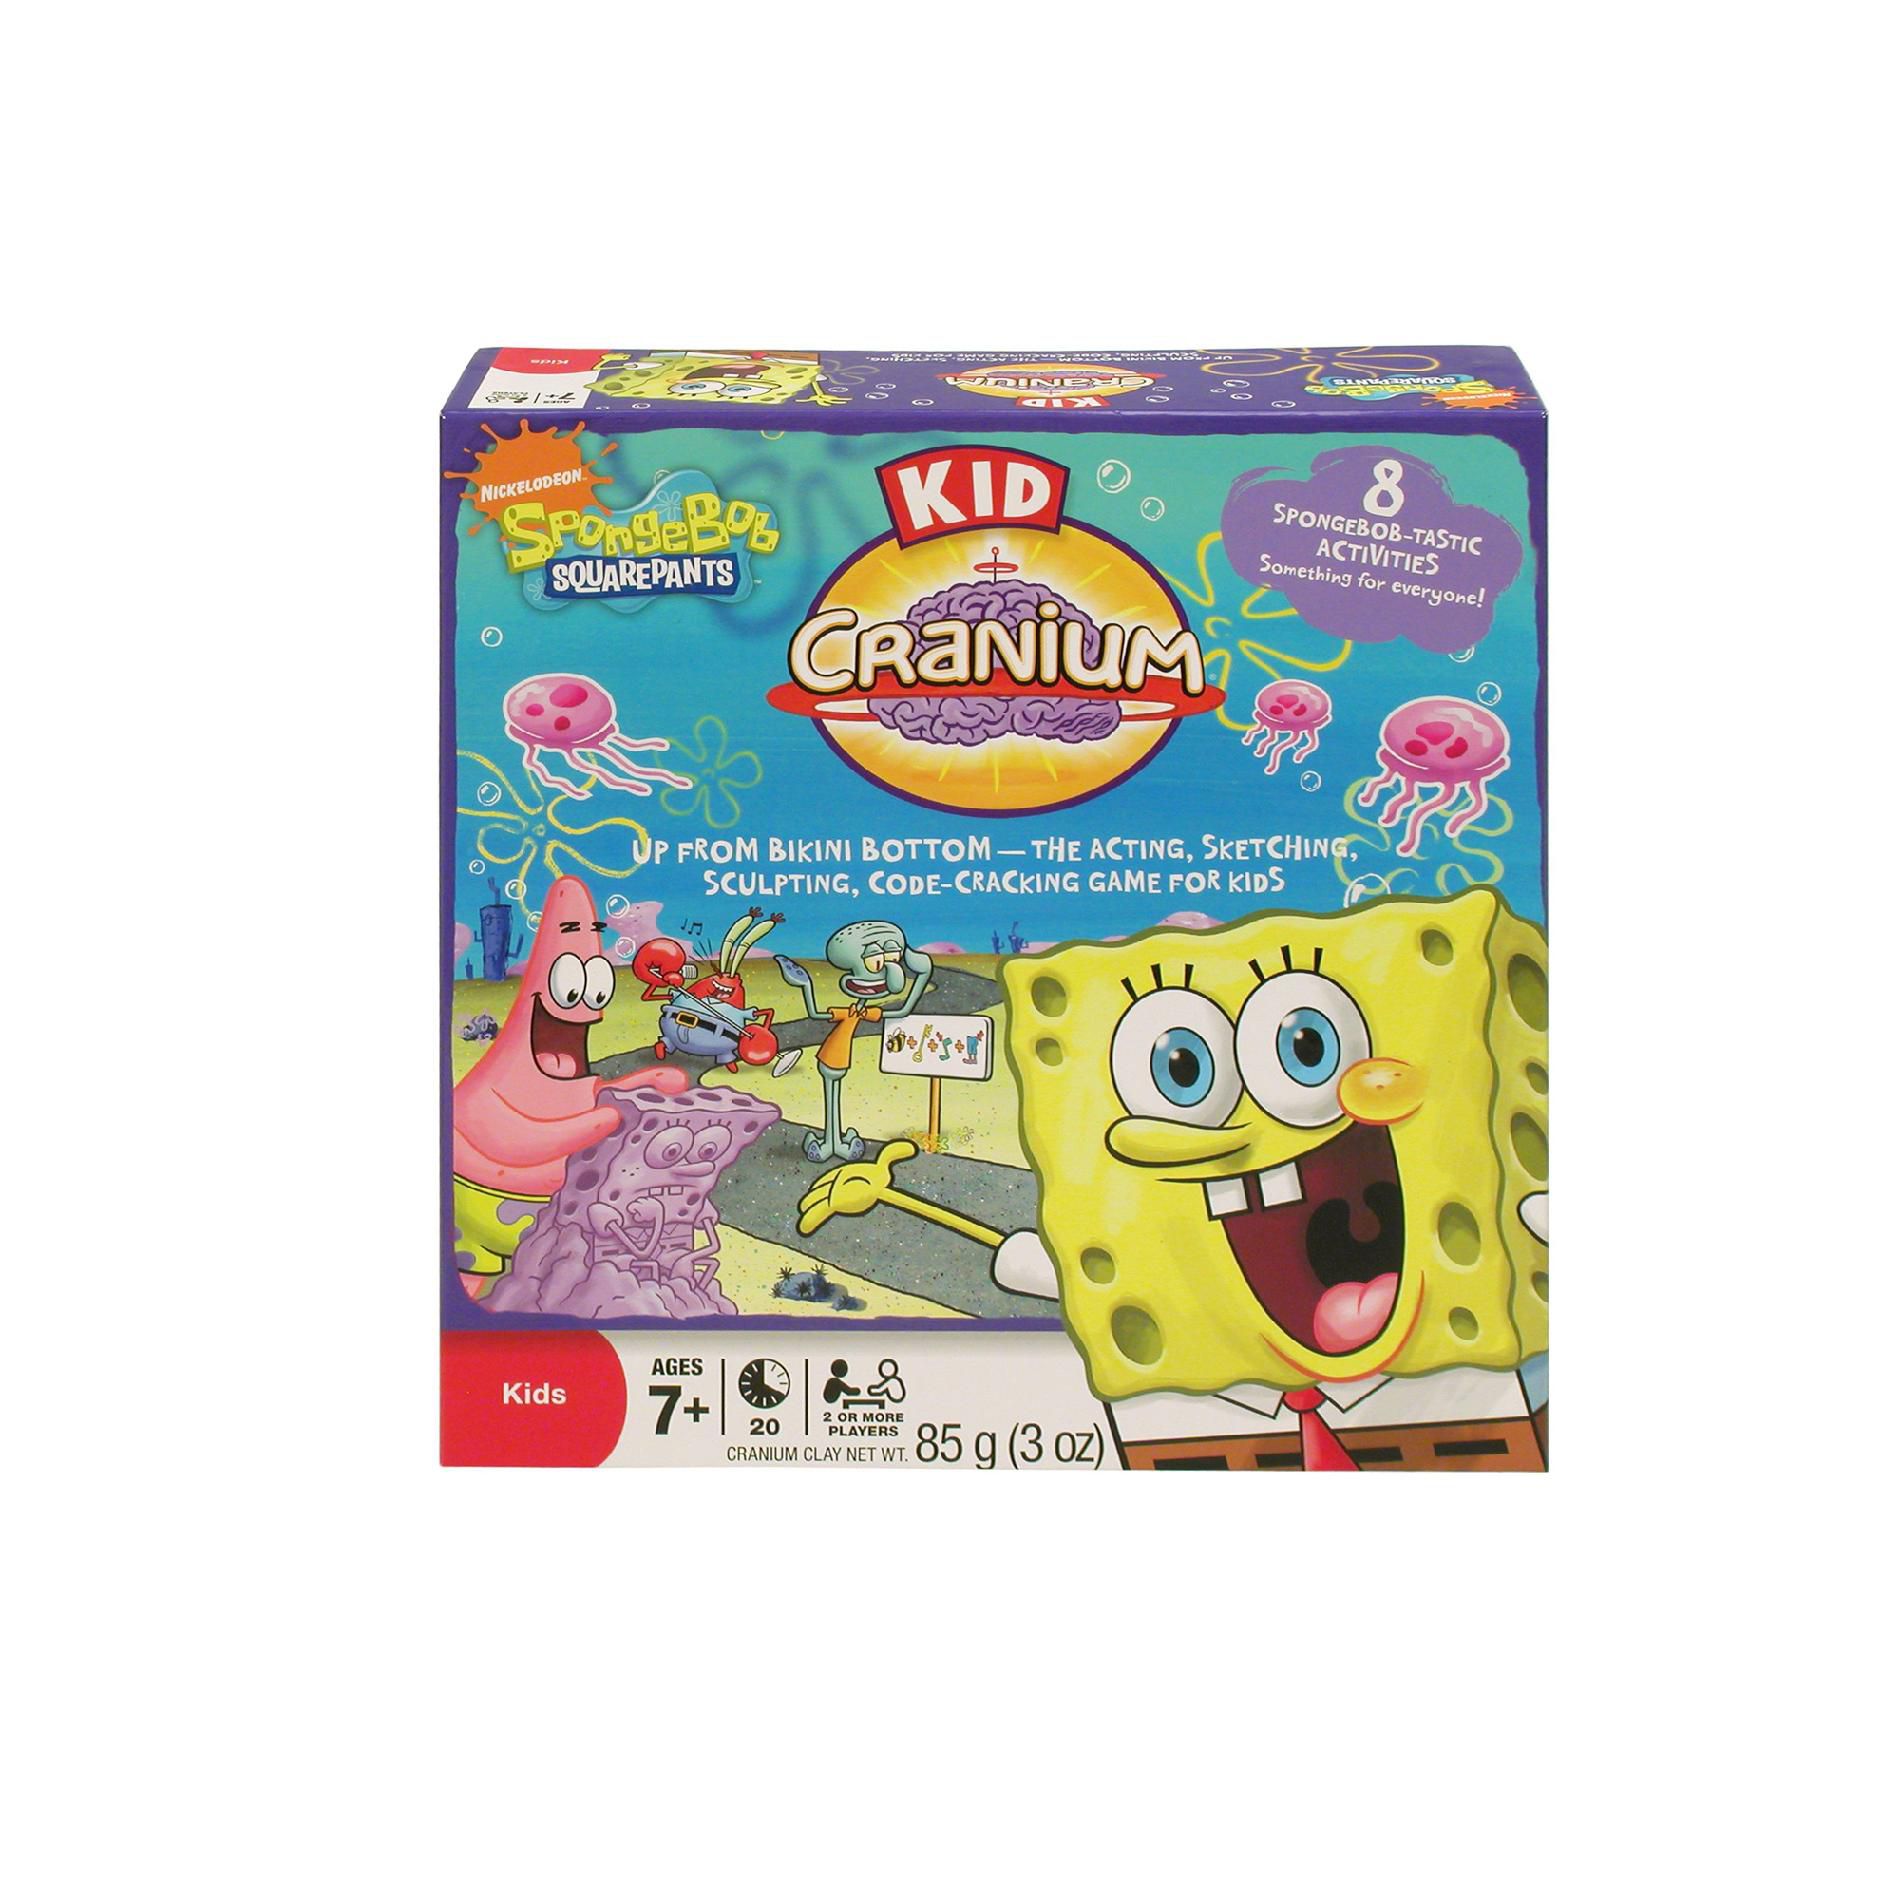 Nickelodeon SpongeBob SquarePants Kid Cranium Activities Game NEW